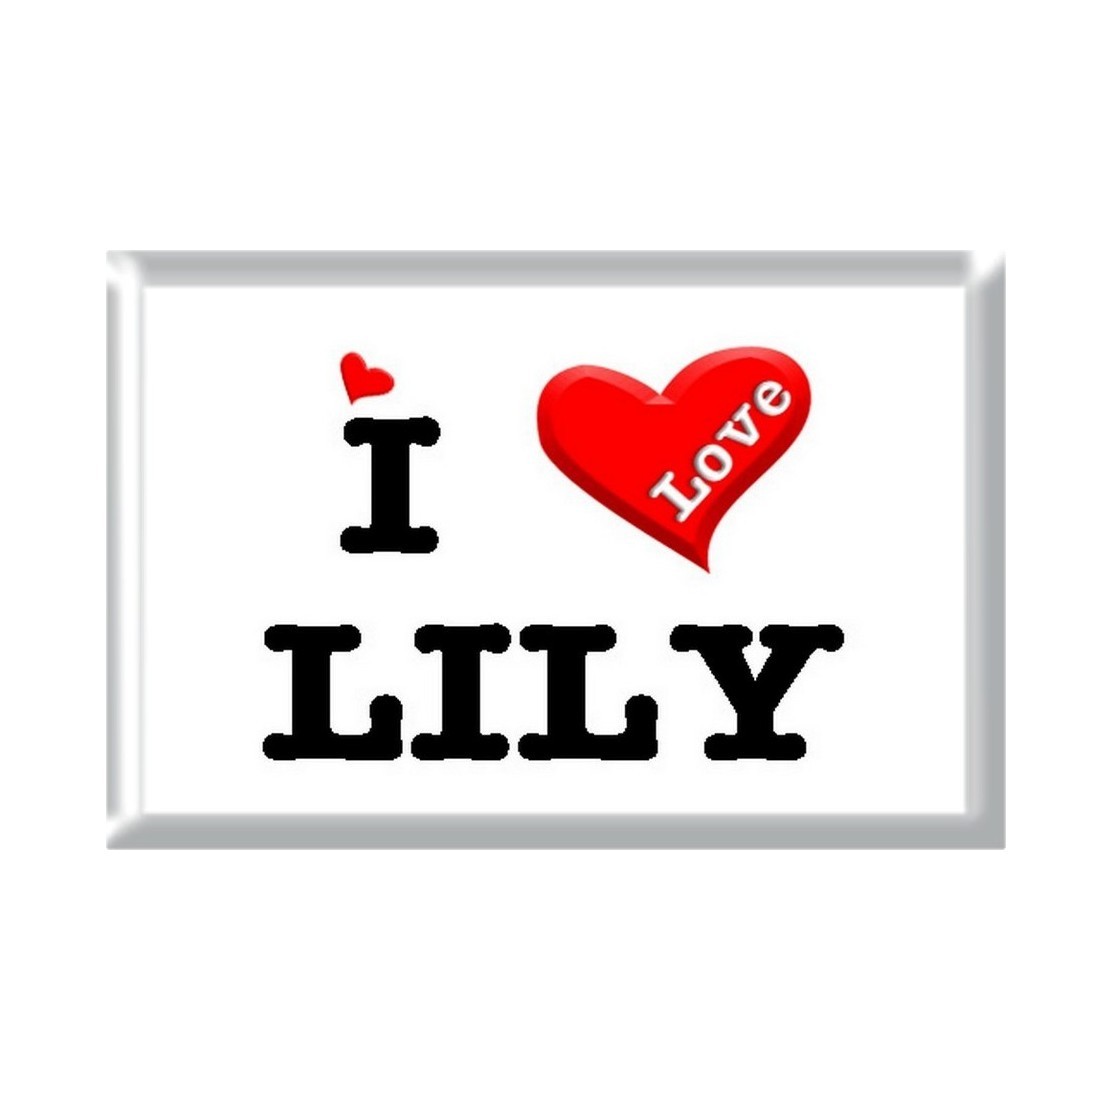 I love lilly